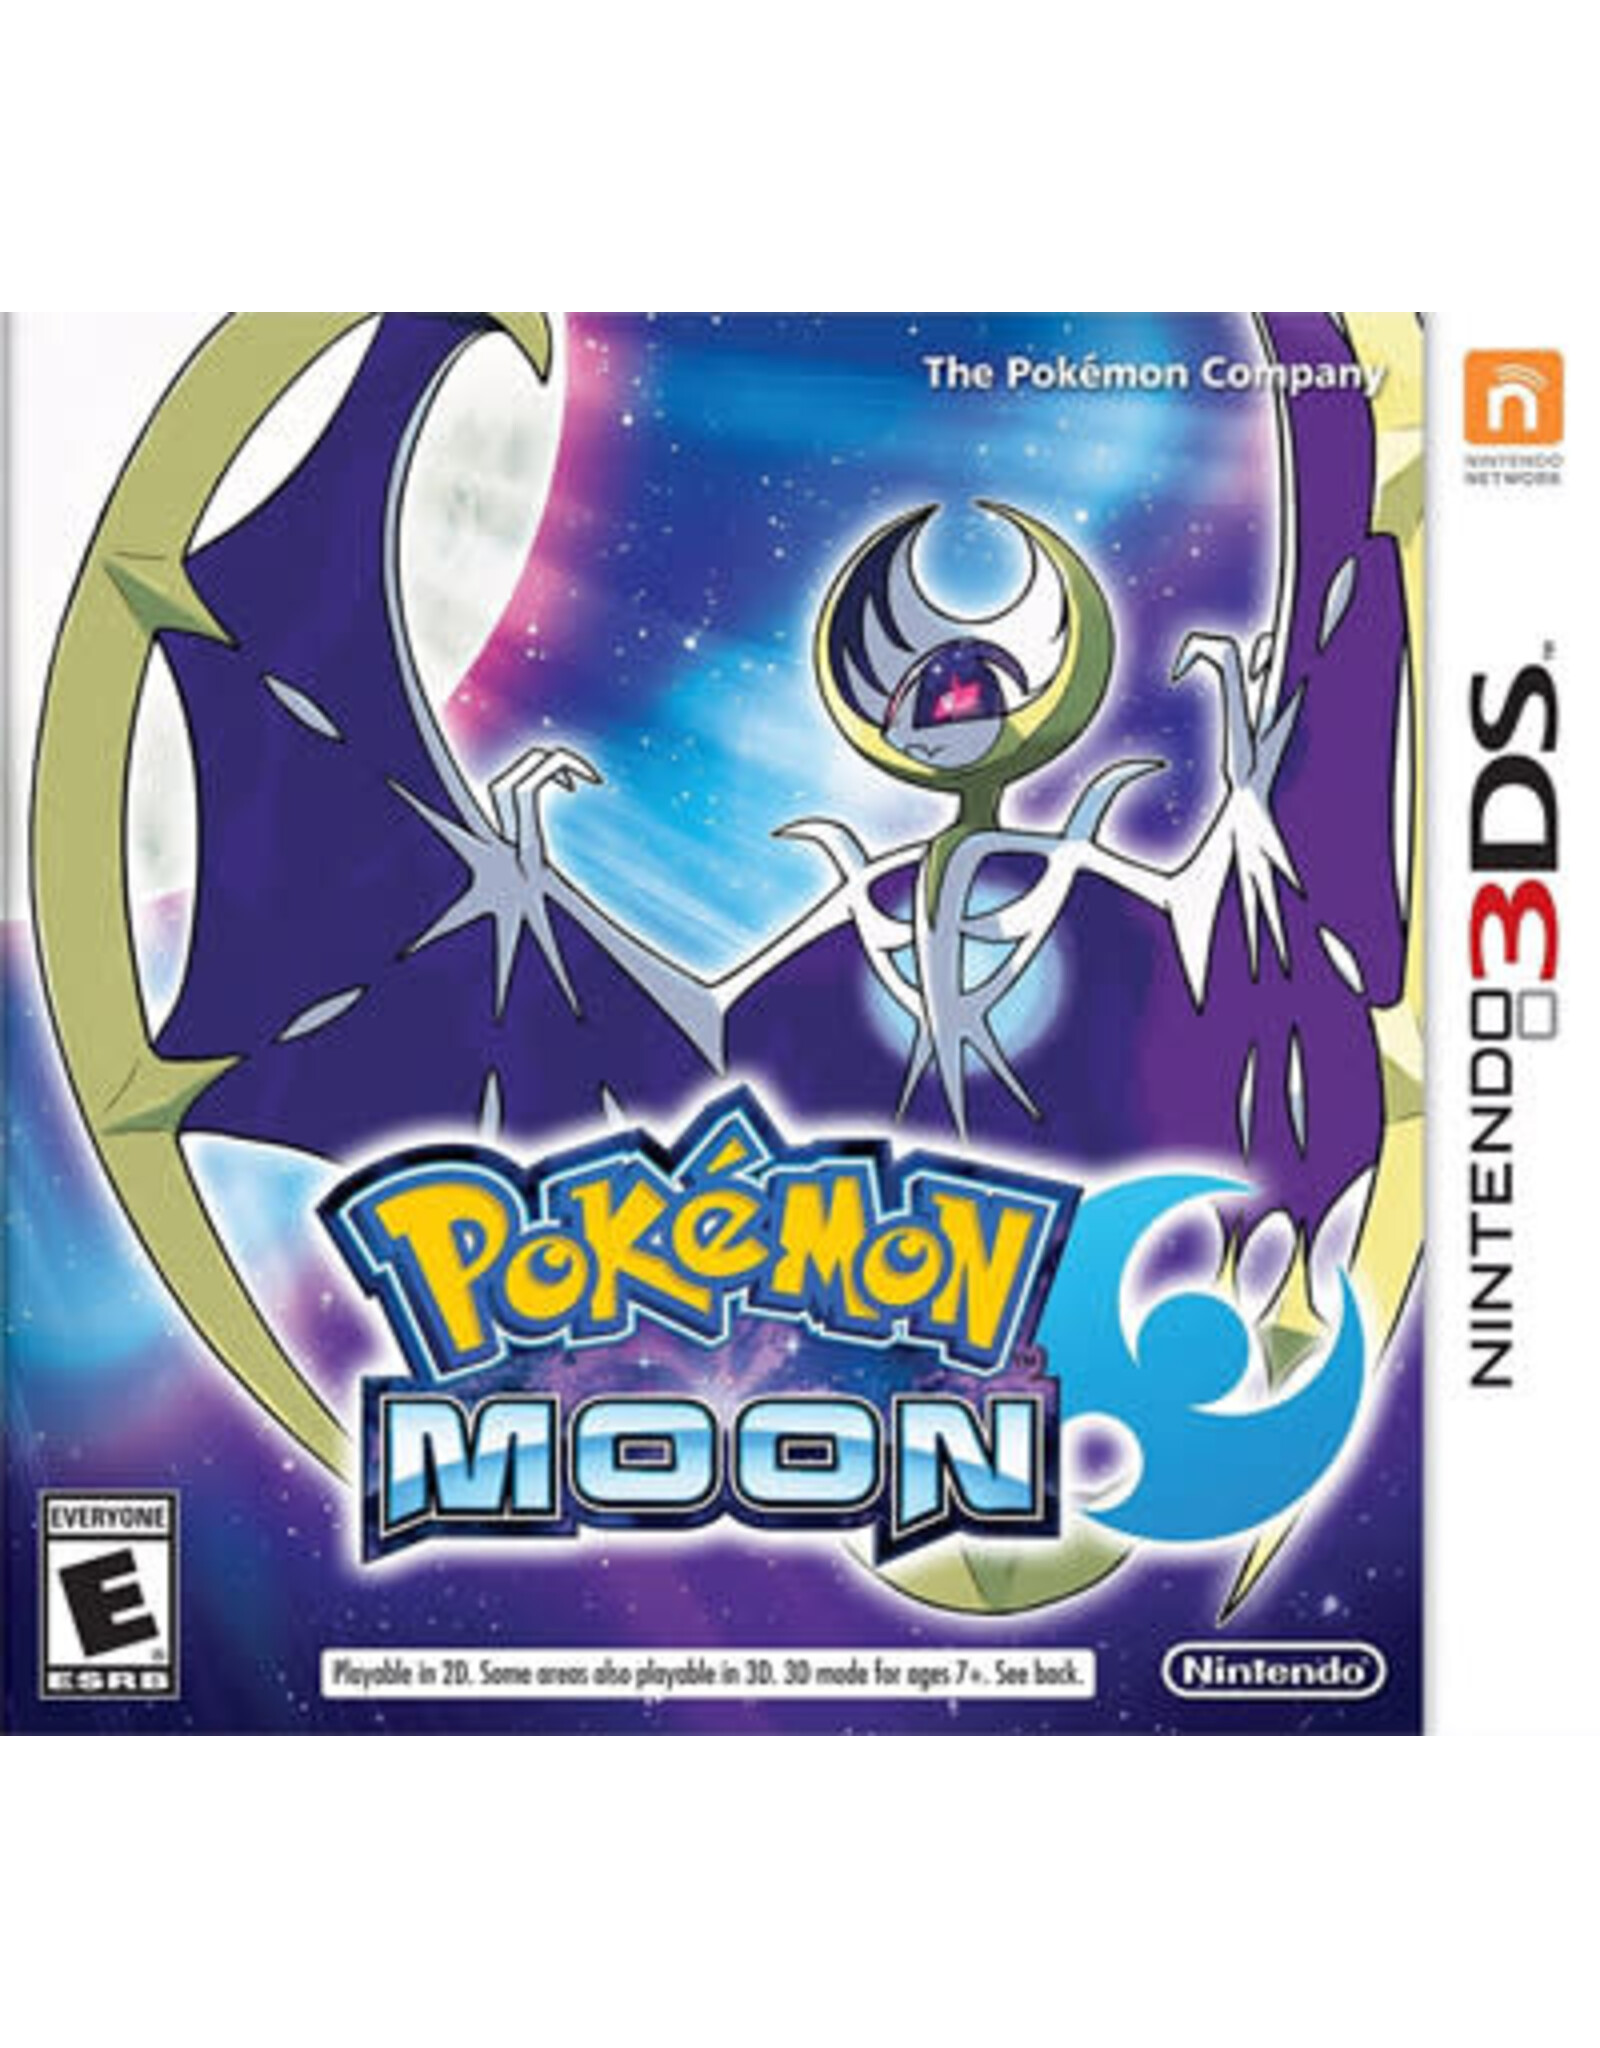 Nintendo 3DS Pokemon Moon (Used, No Manual, Cosmetic Damage)